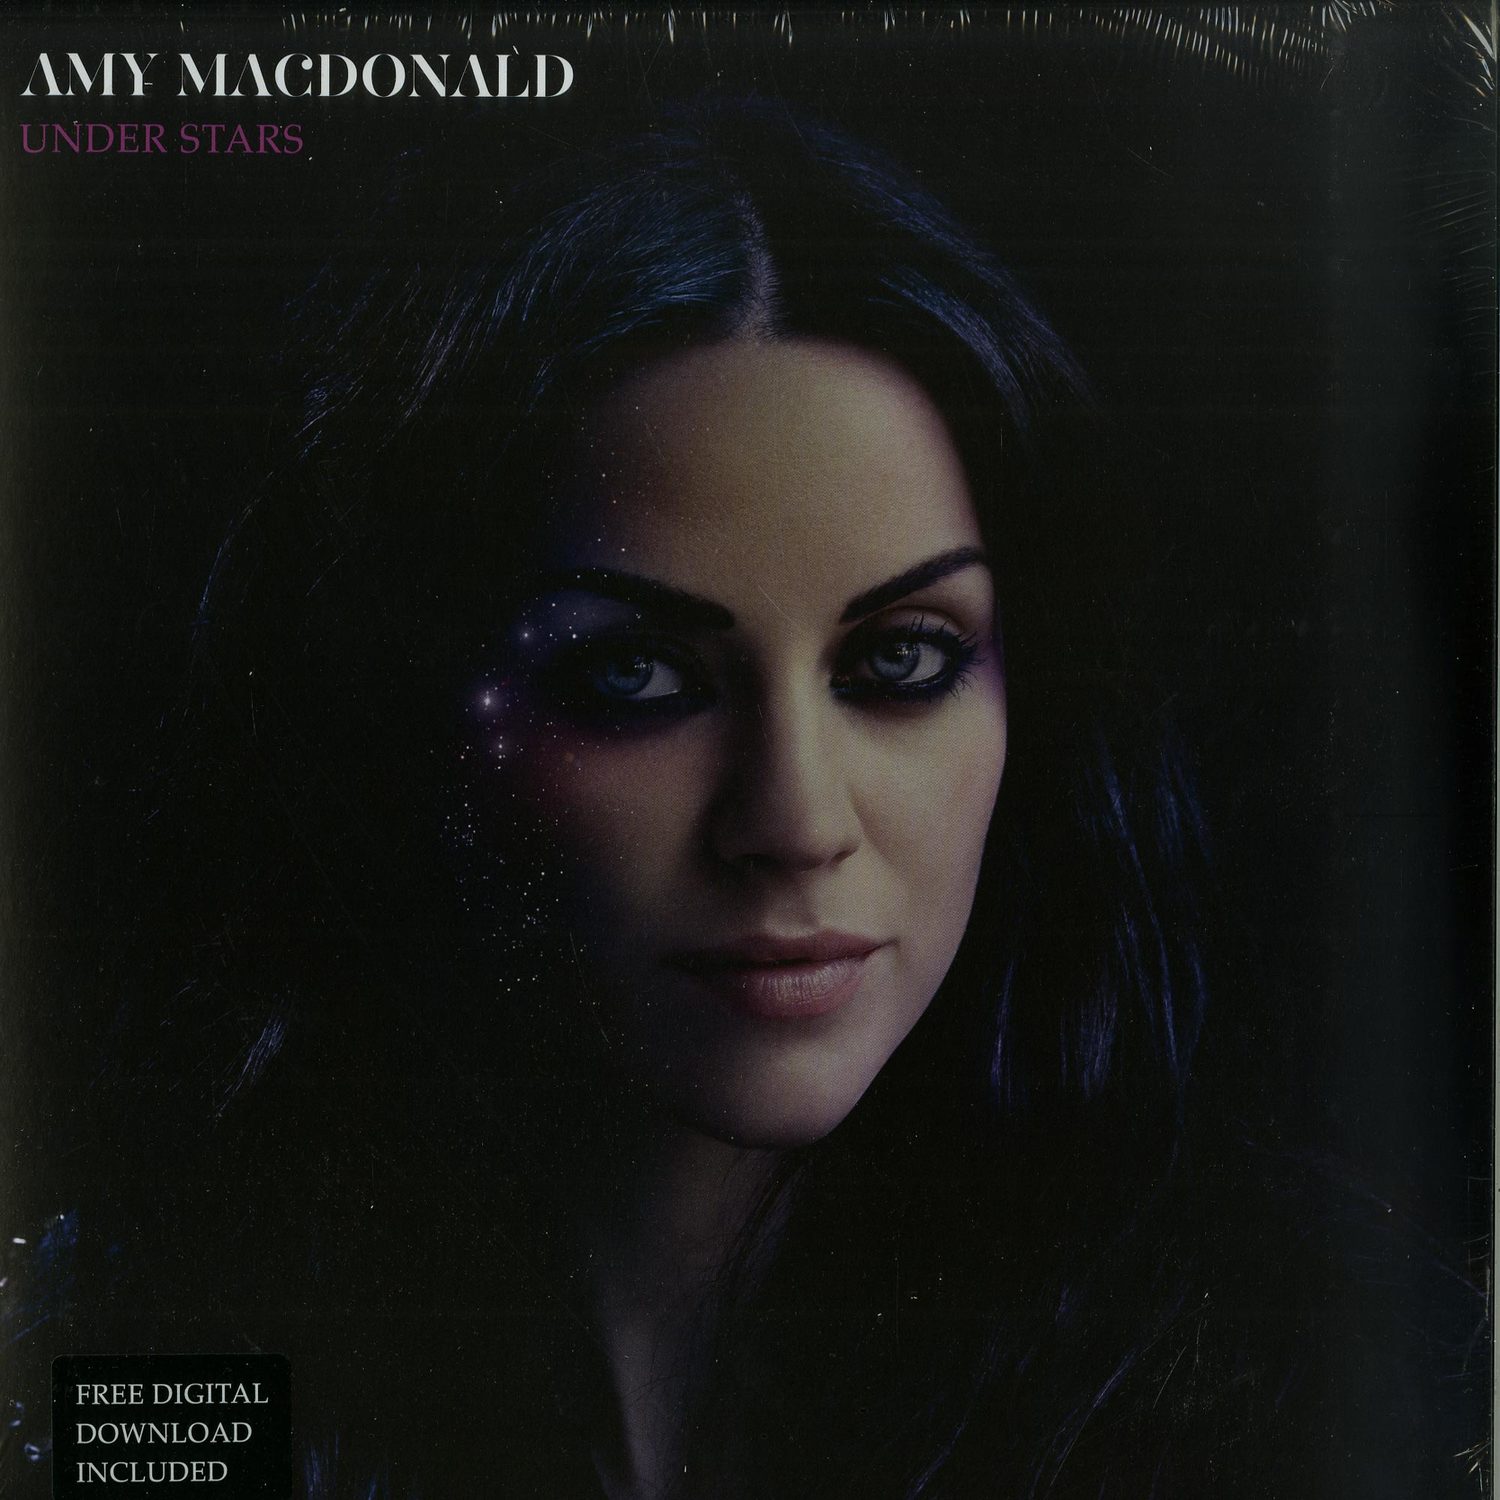 Amy MacDonald - UNDER STARS 